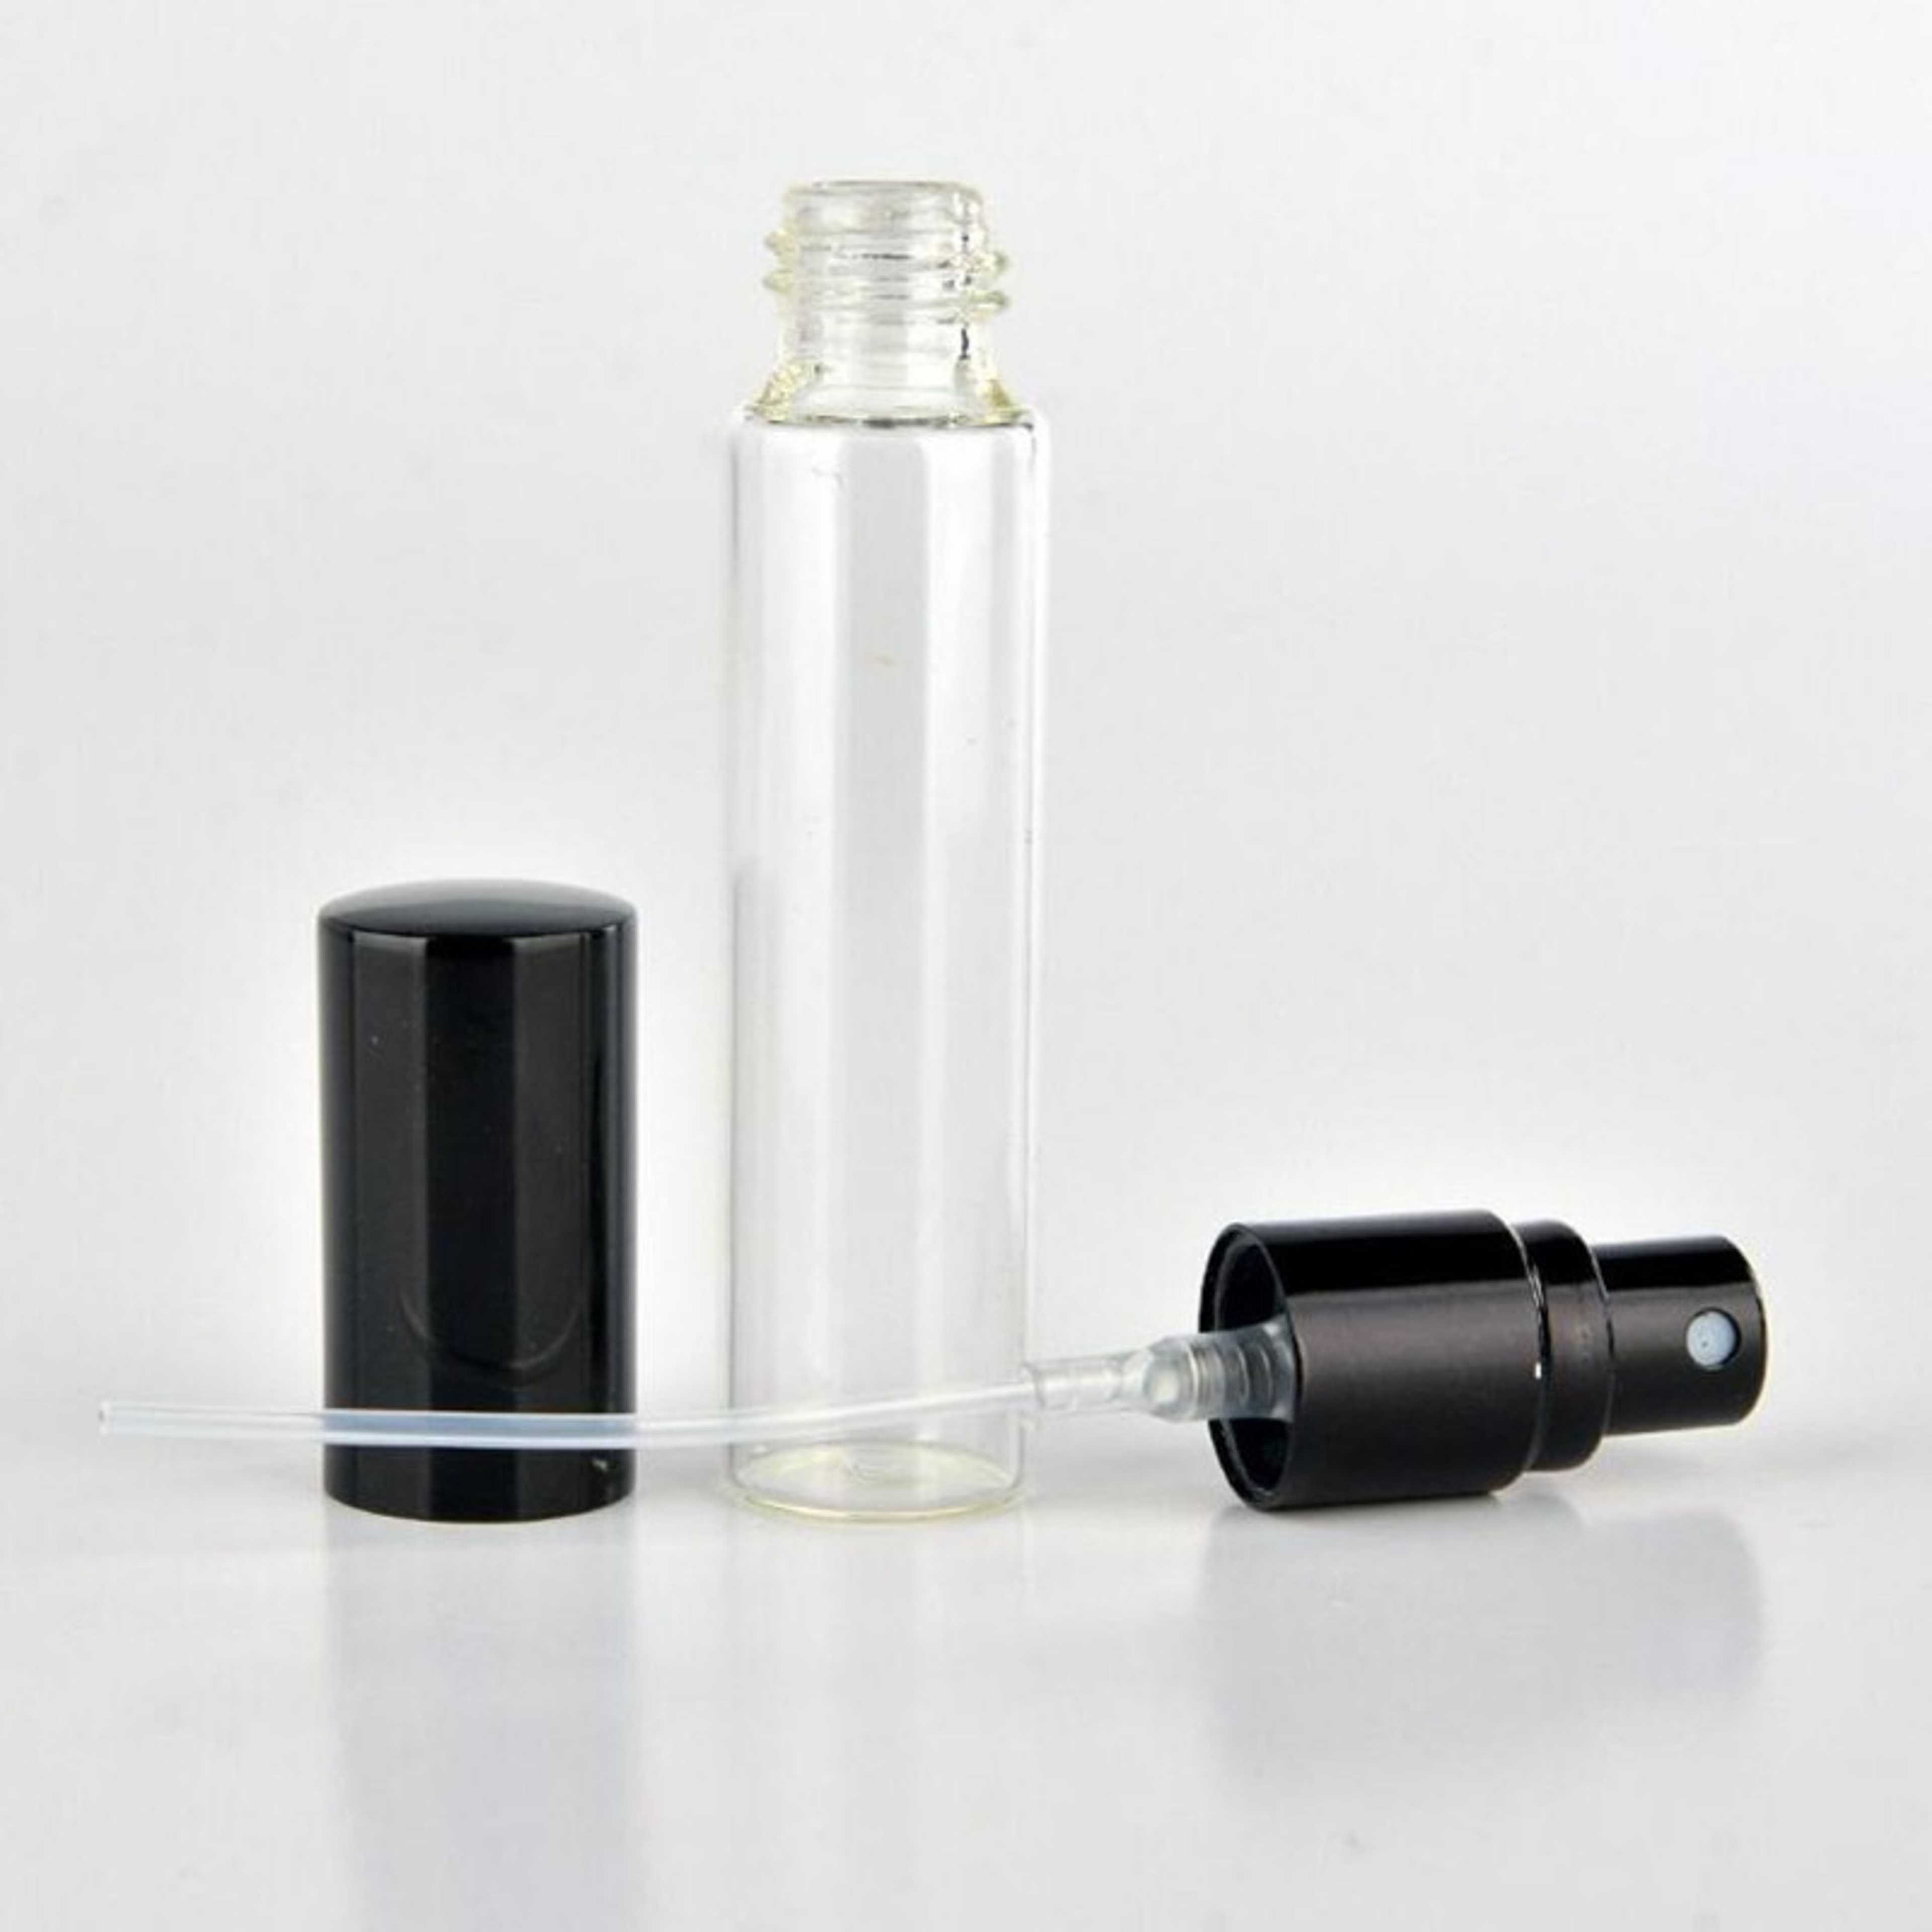 5ml Perfume Spray Bottles Refillable Mini Empty Travel Refillable Glass Bottles  Pack of 100Pcs (Size 5ml)